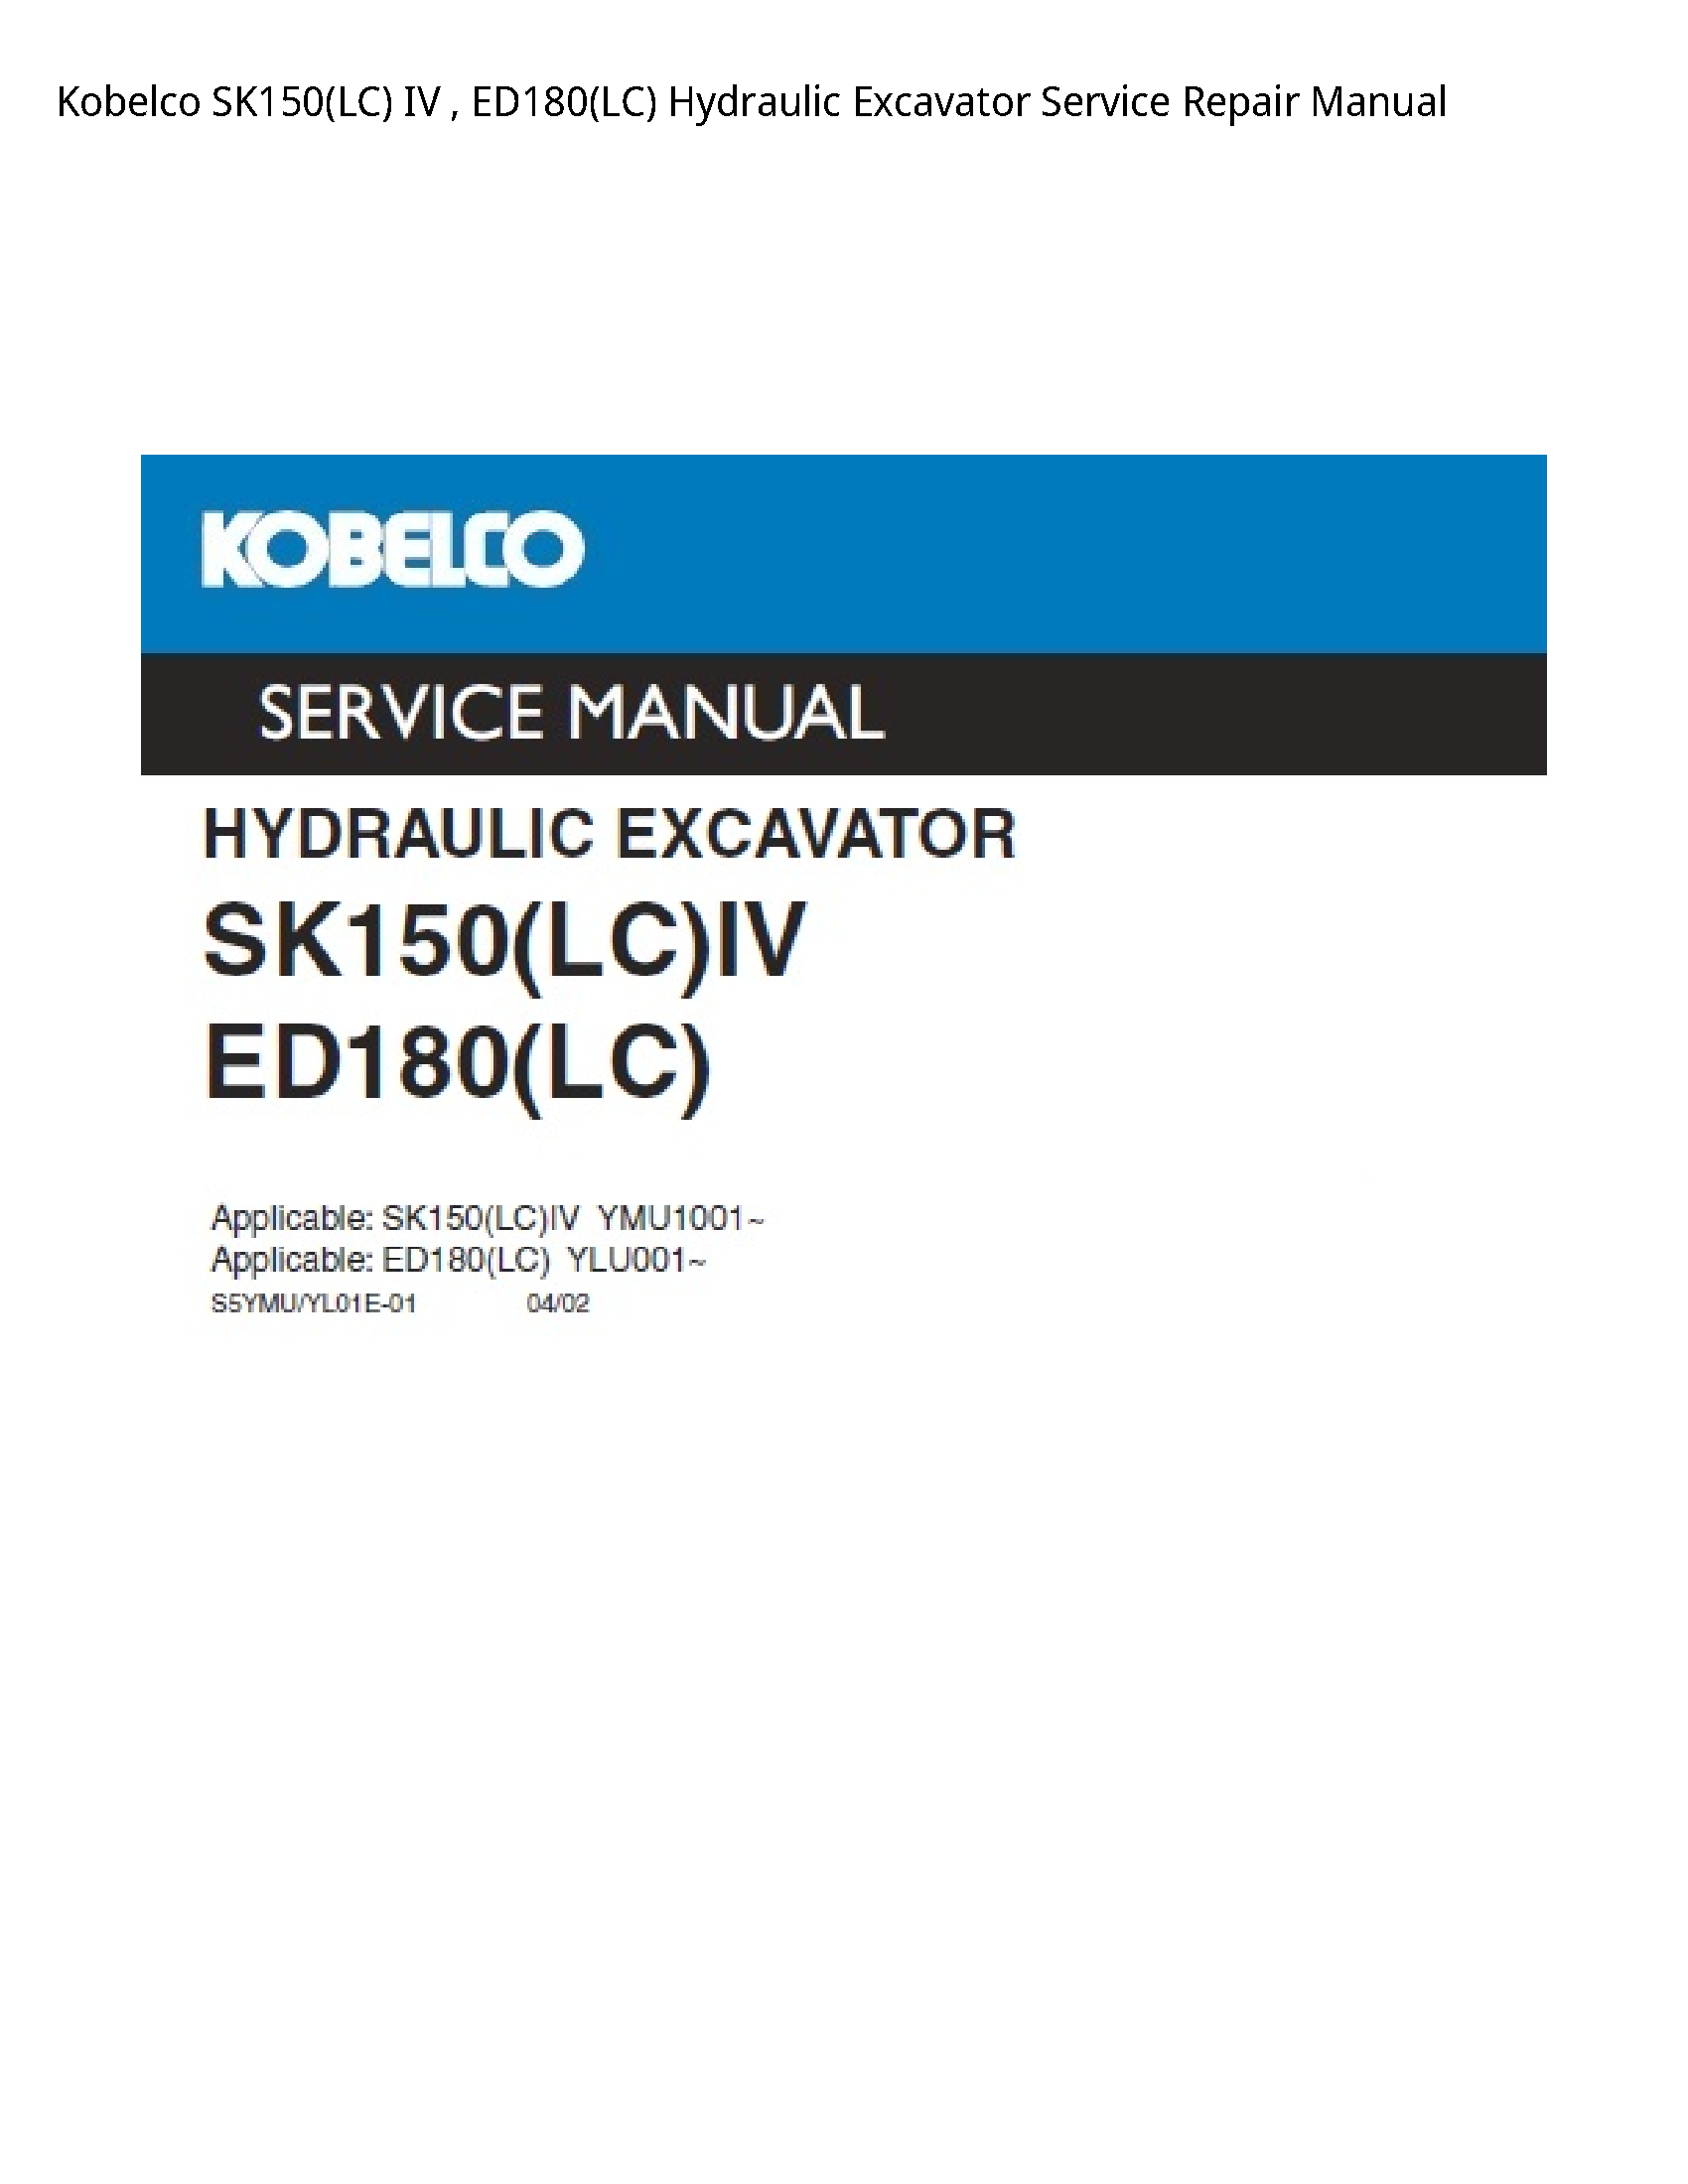 Kobelco SK150(LC) IV Hydraulic Excavator manual